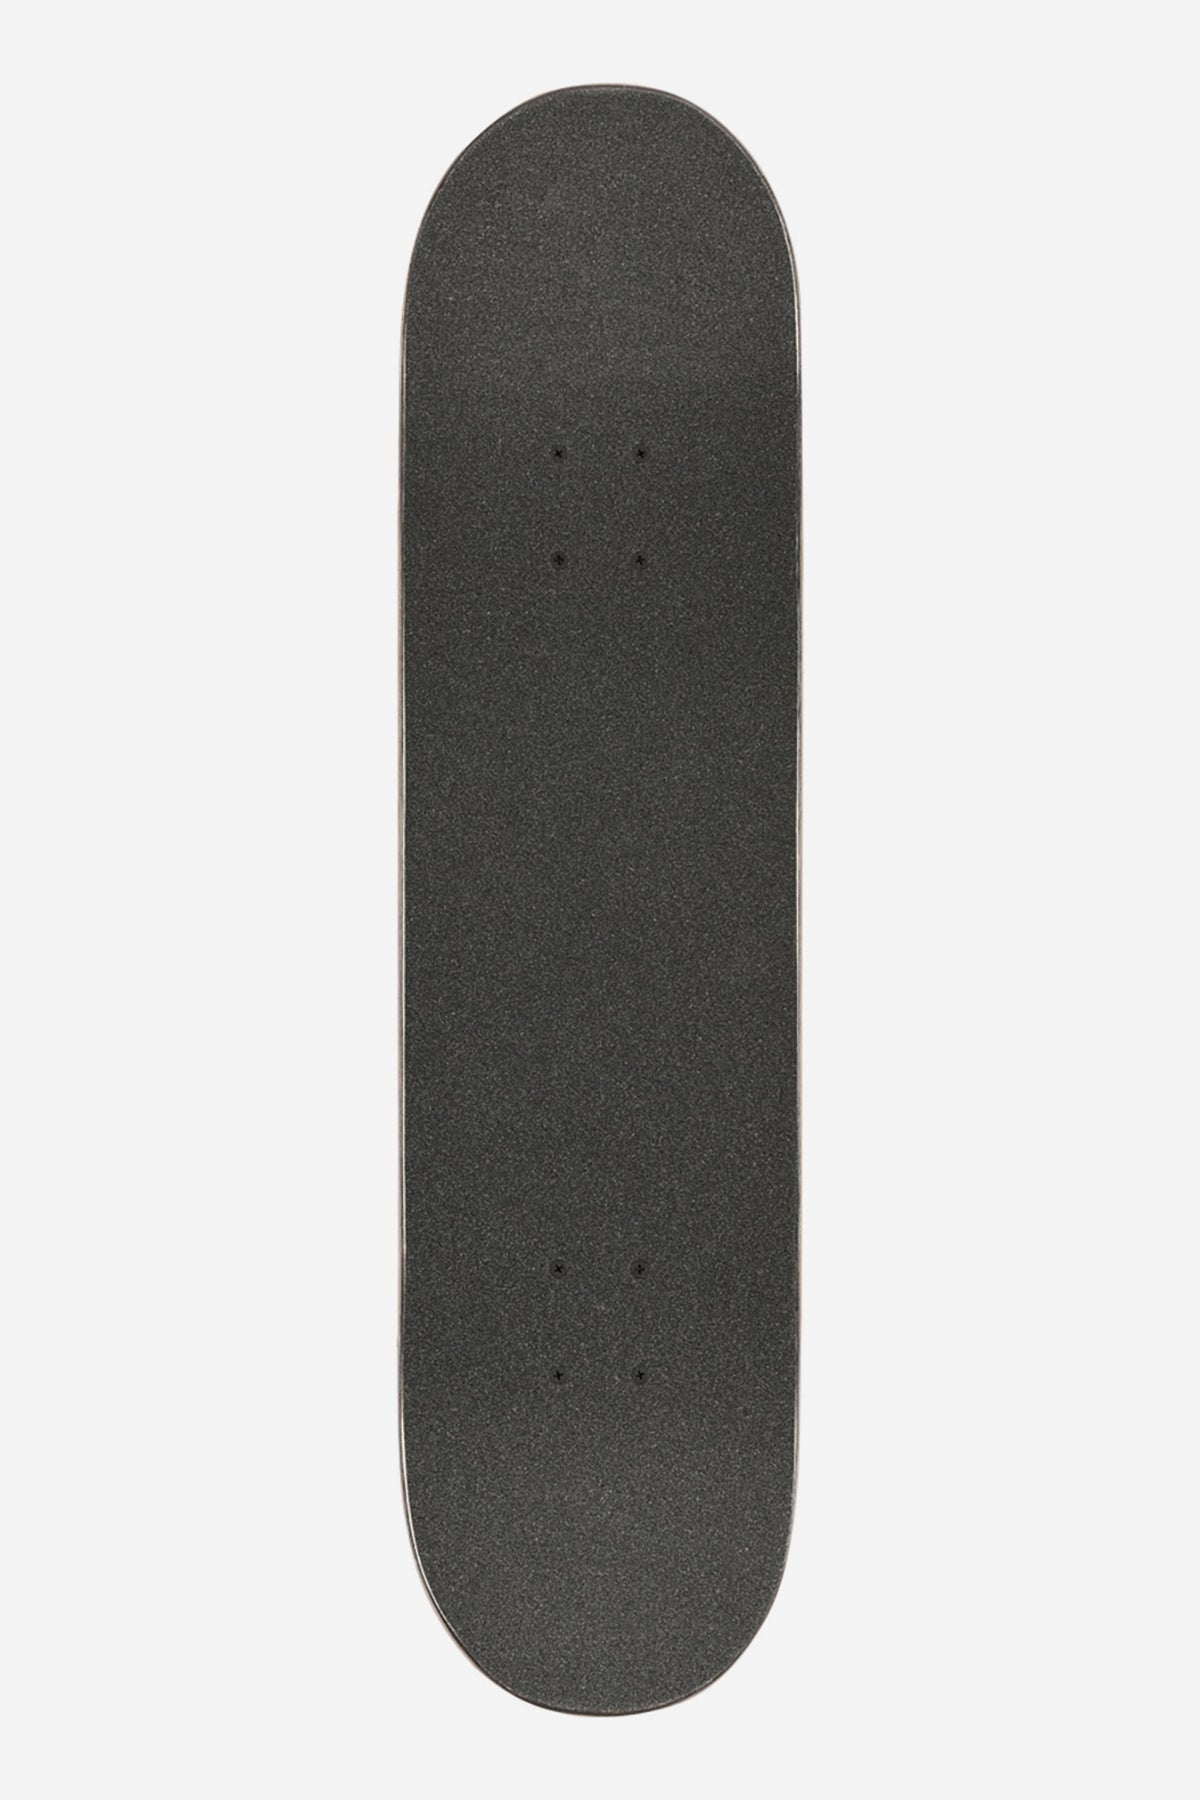 Globe - Goodstock - Navy - 7.875" Compleet Skateboard